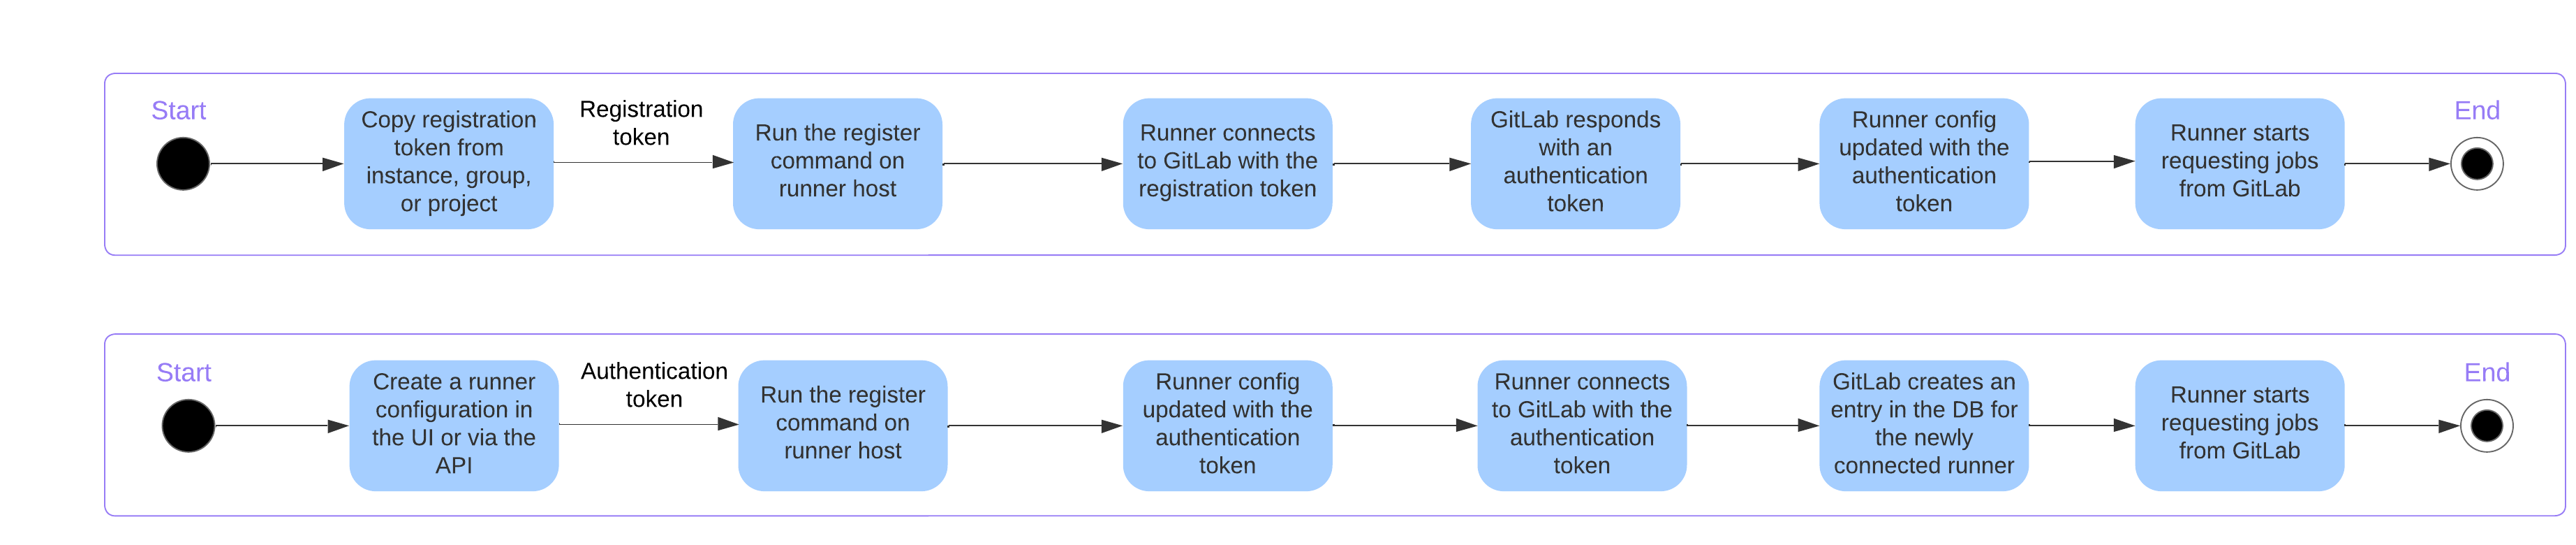 GitLab Runner registration workflows